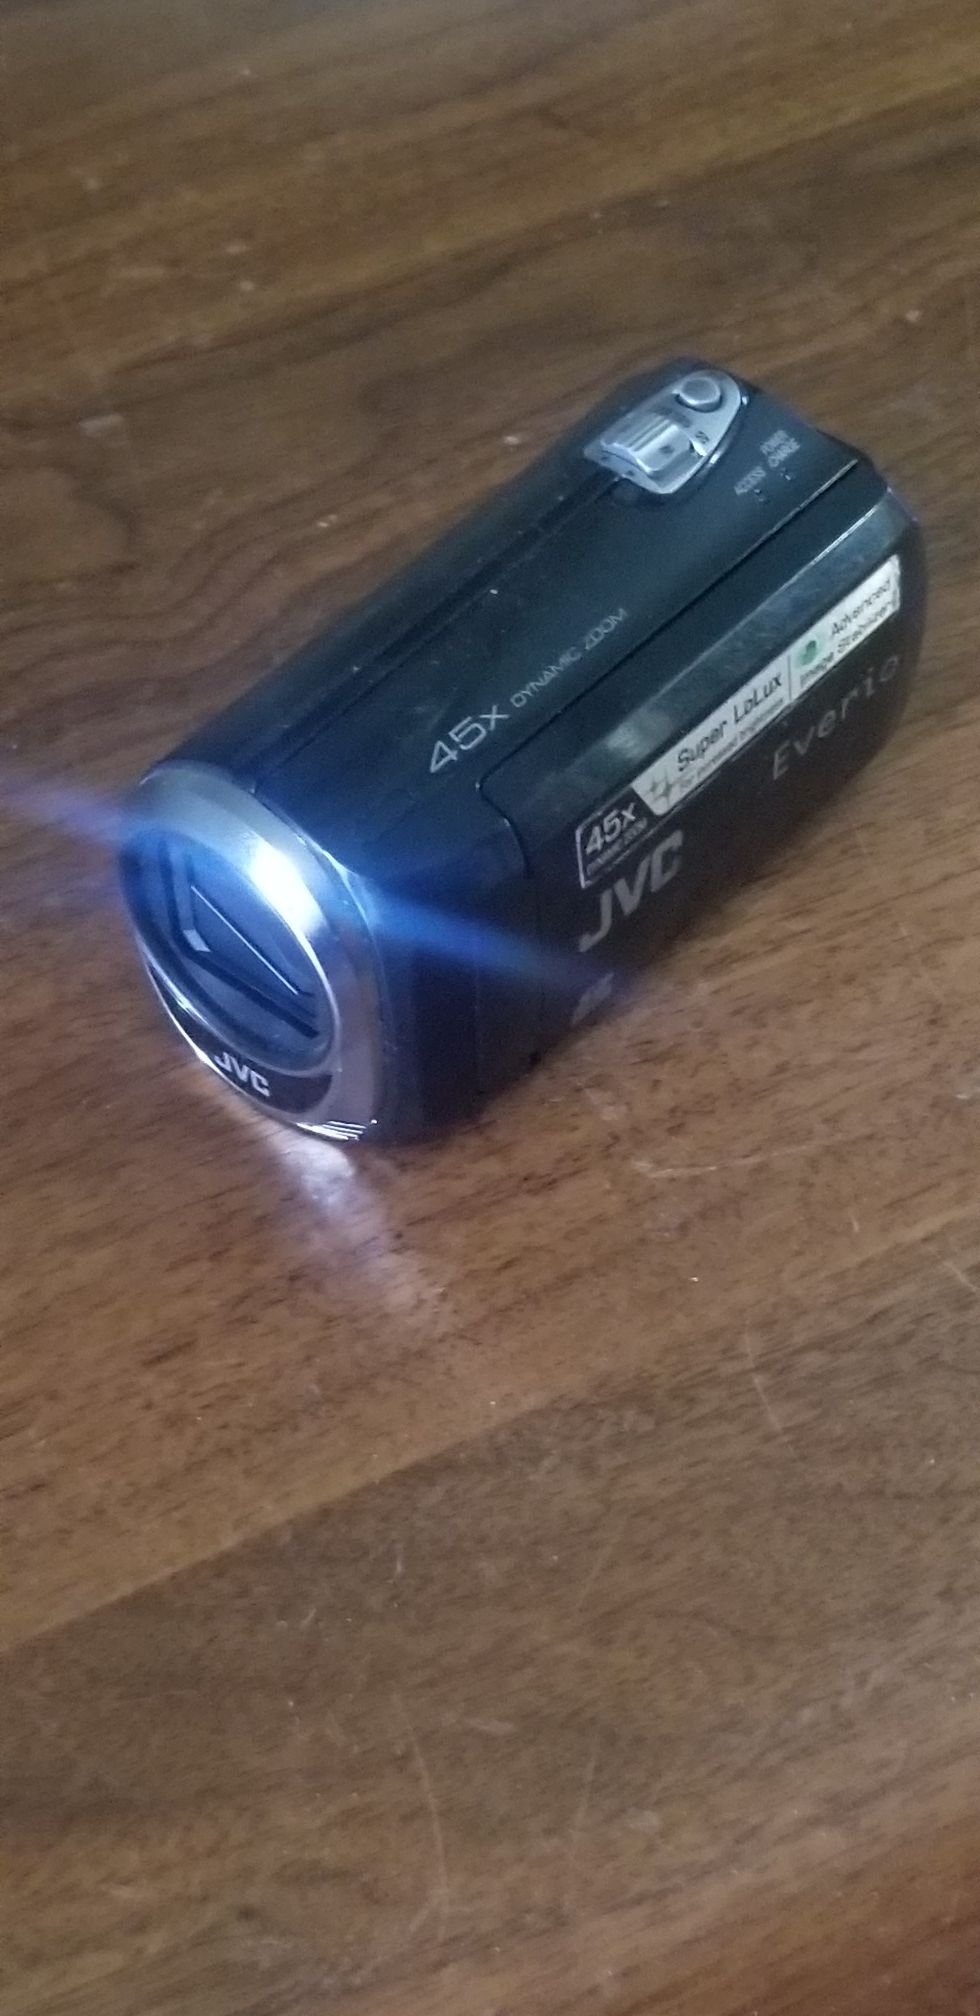 JVC GS-MS110BU camcorder